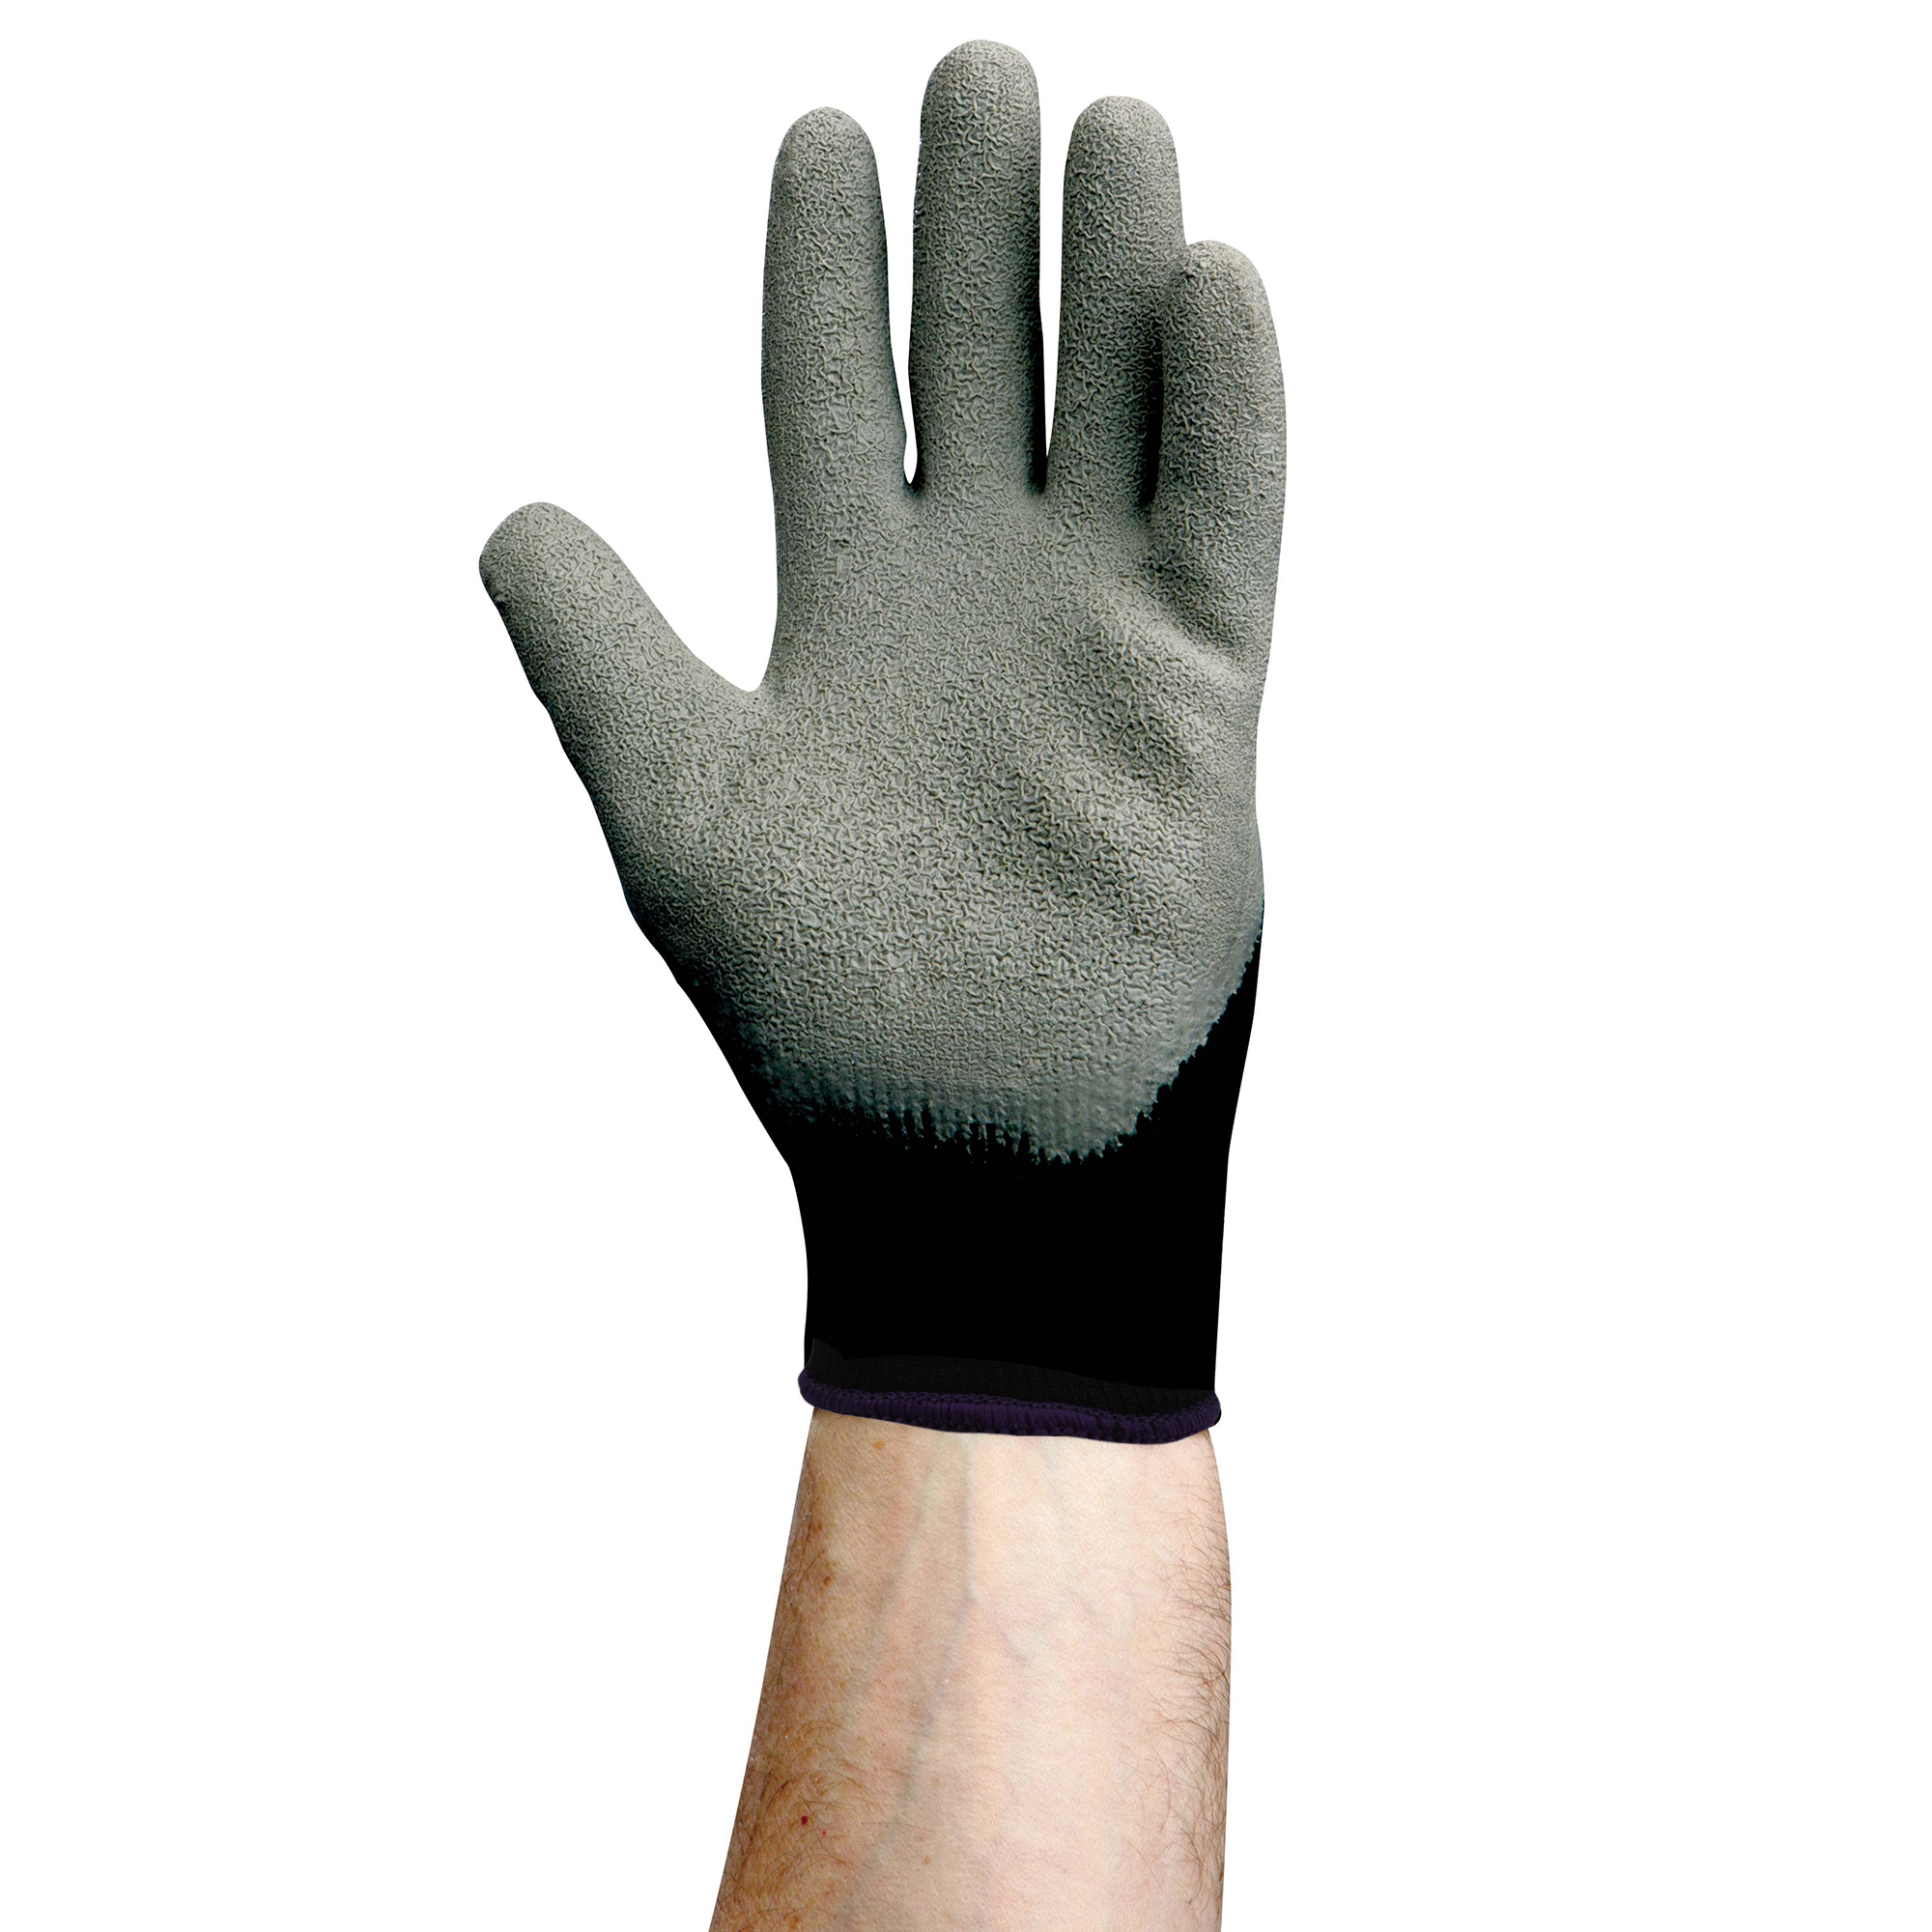 KleenGuard™ G40 Latex Coated General Purpose Gloves - 42632